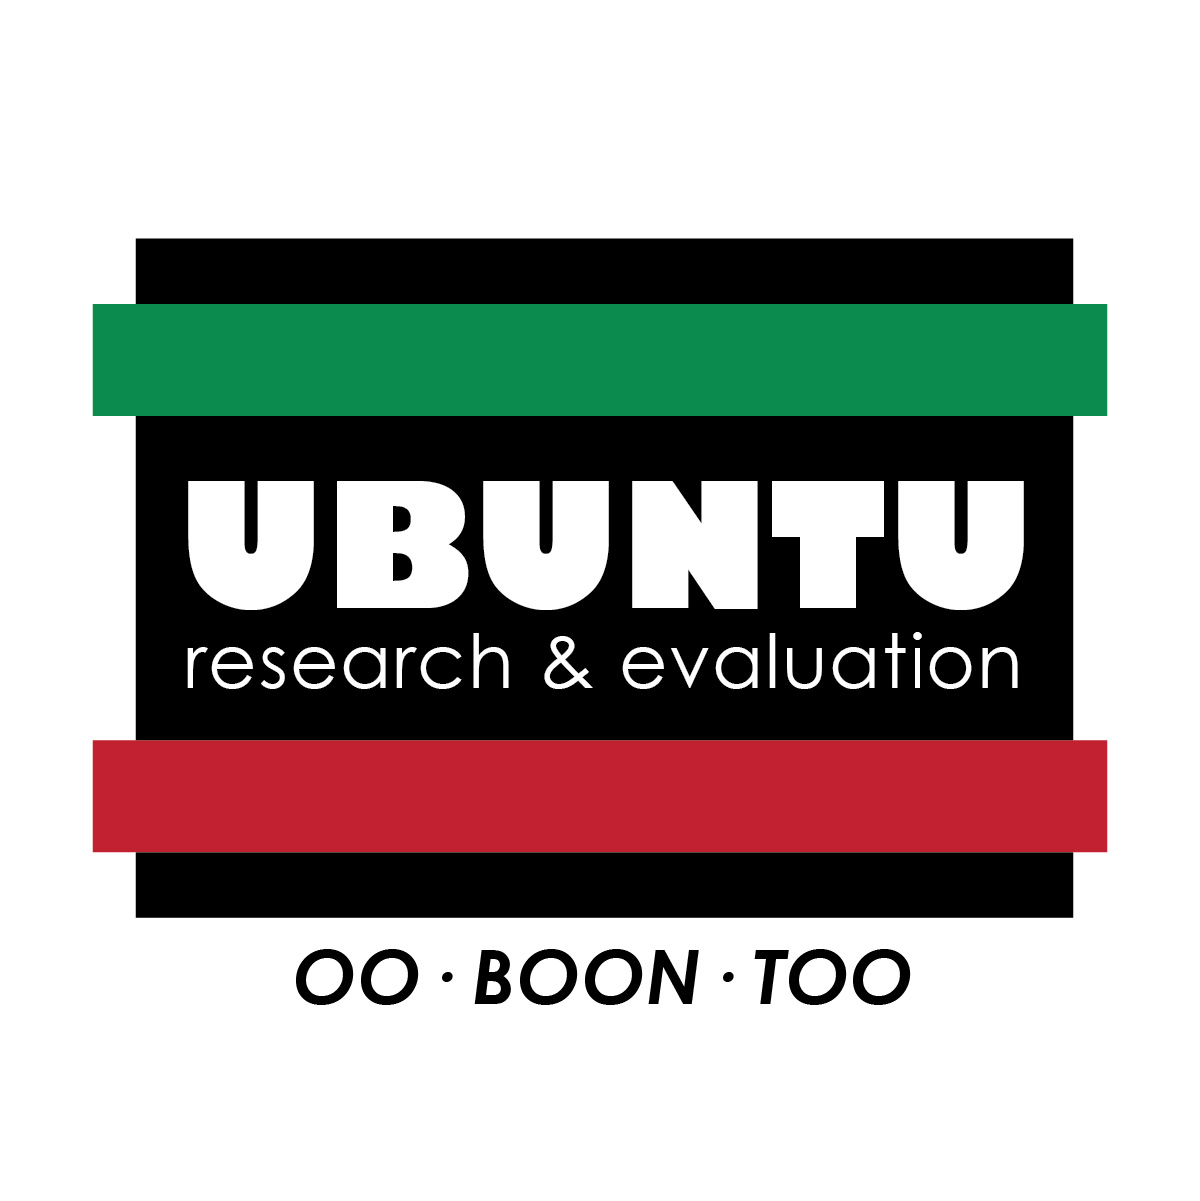 UBUNTU Research and Evaluation